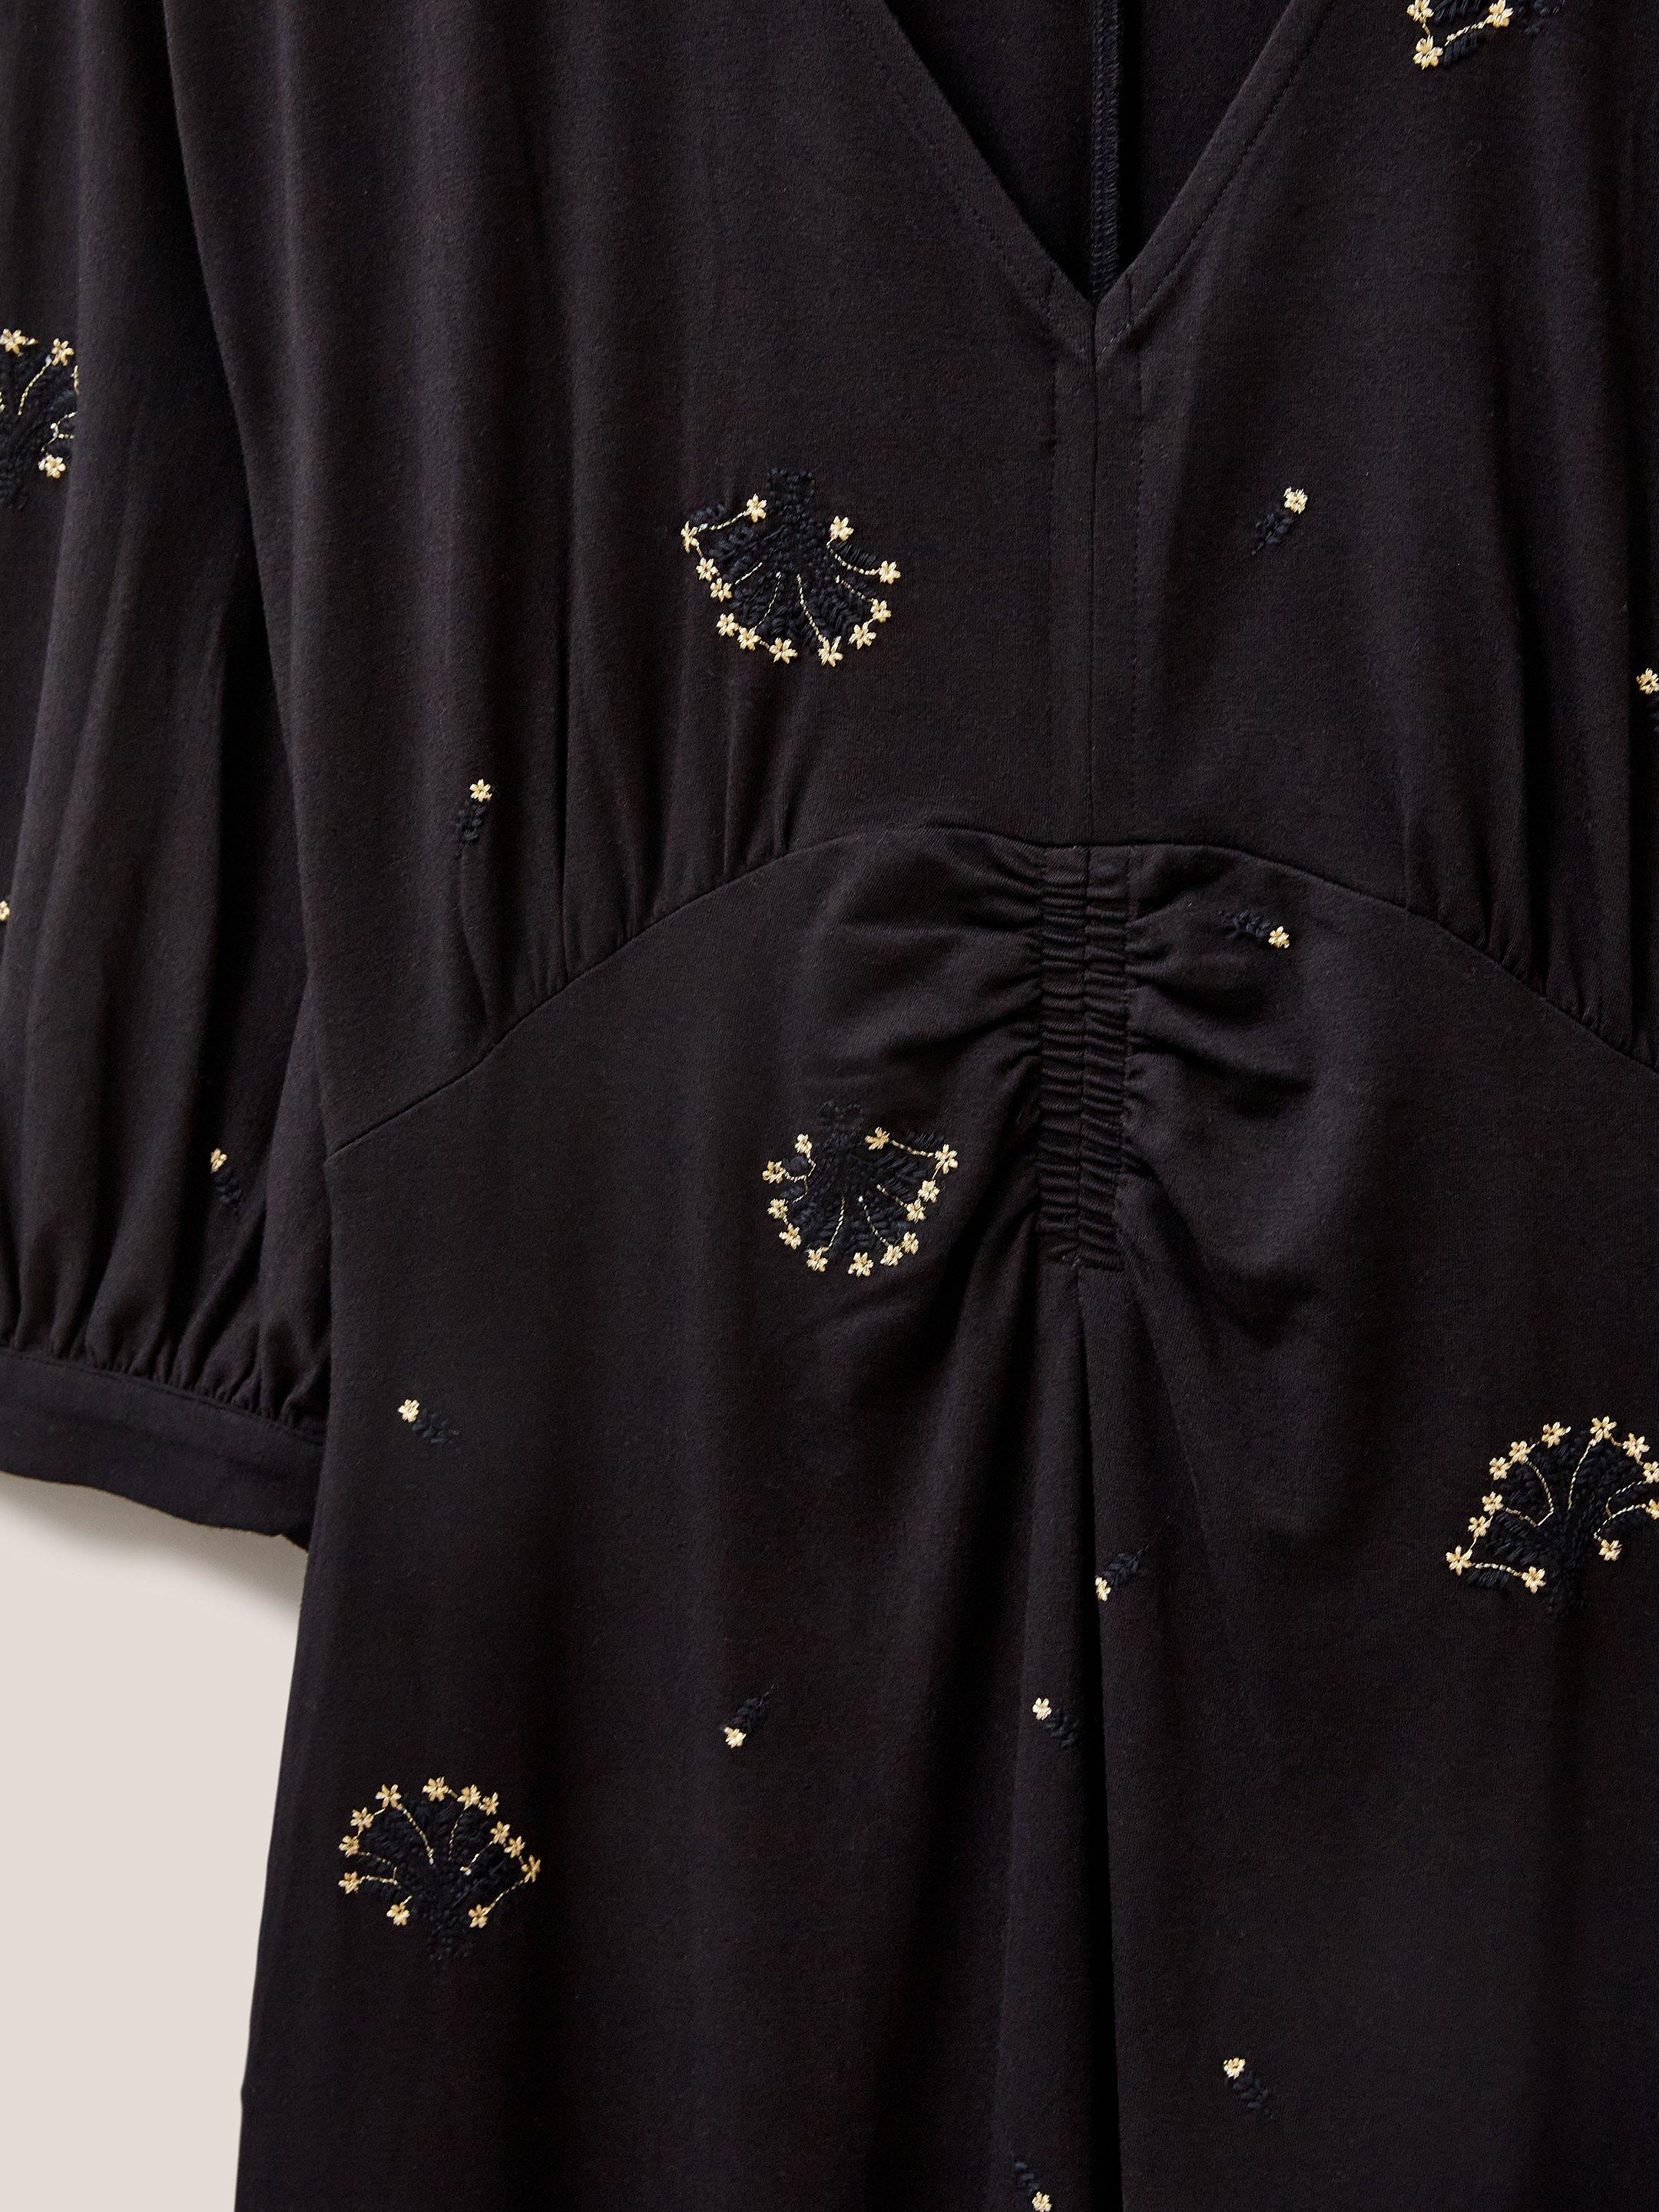 Megan Embroidered Jersey Dress in BLK MLT - FLAT DETAIL